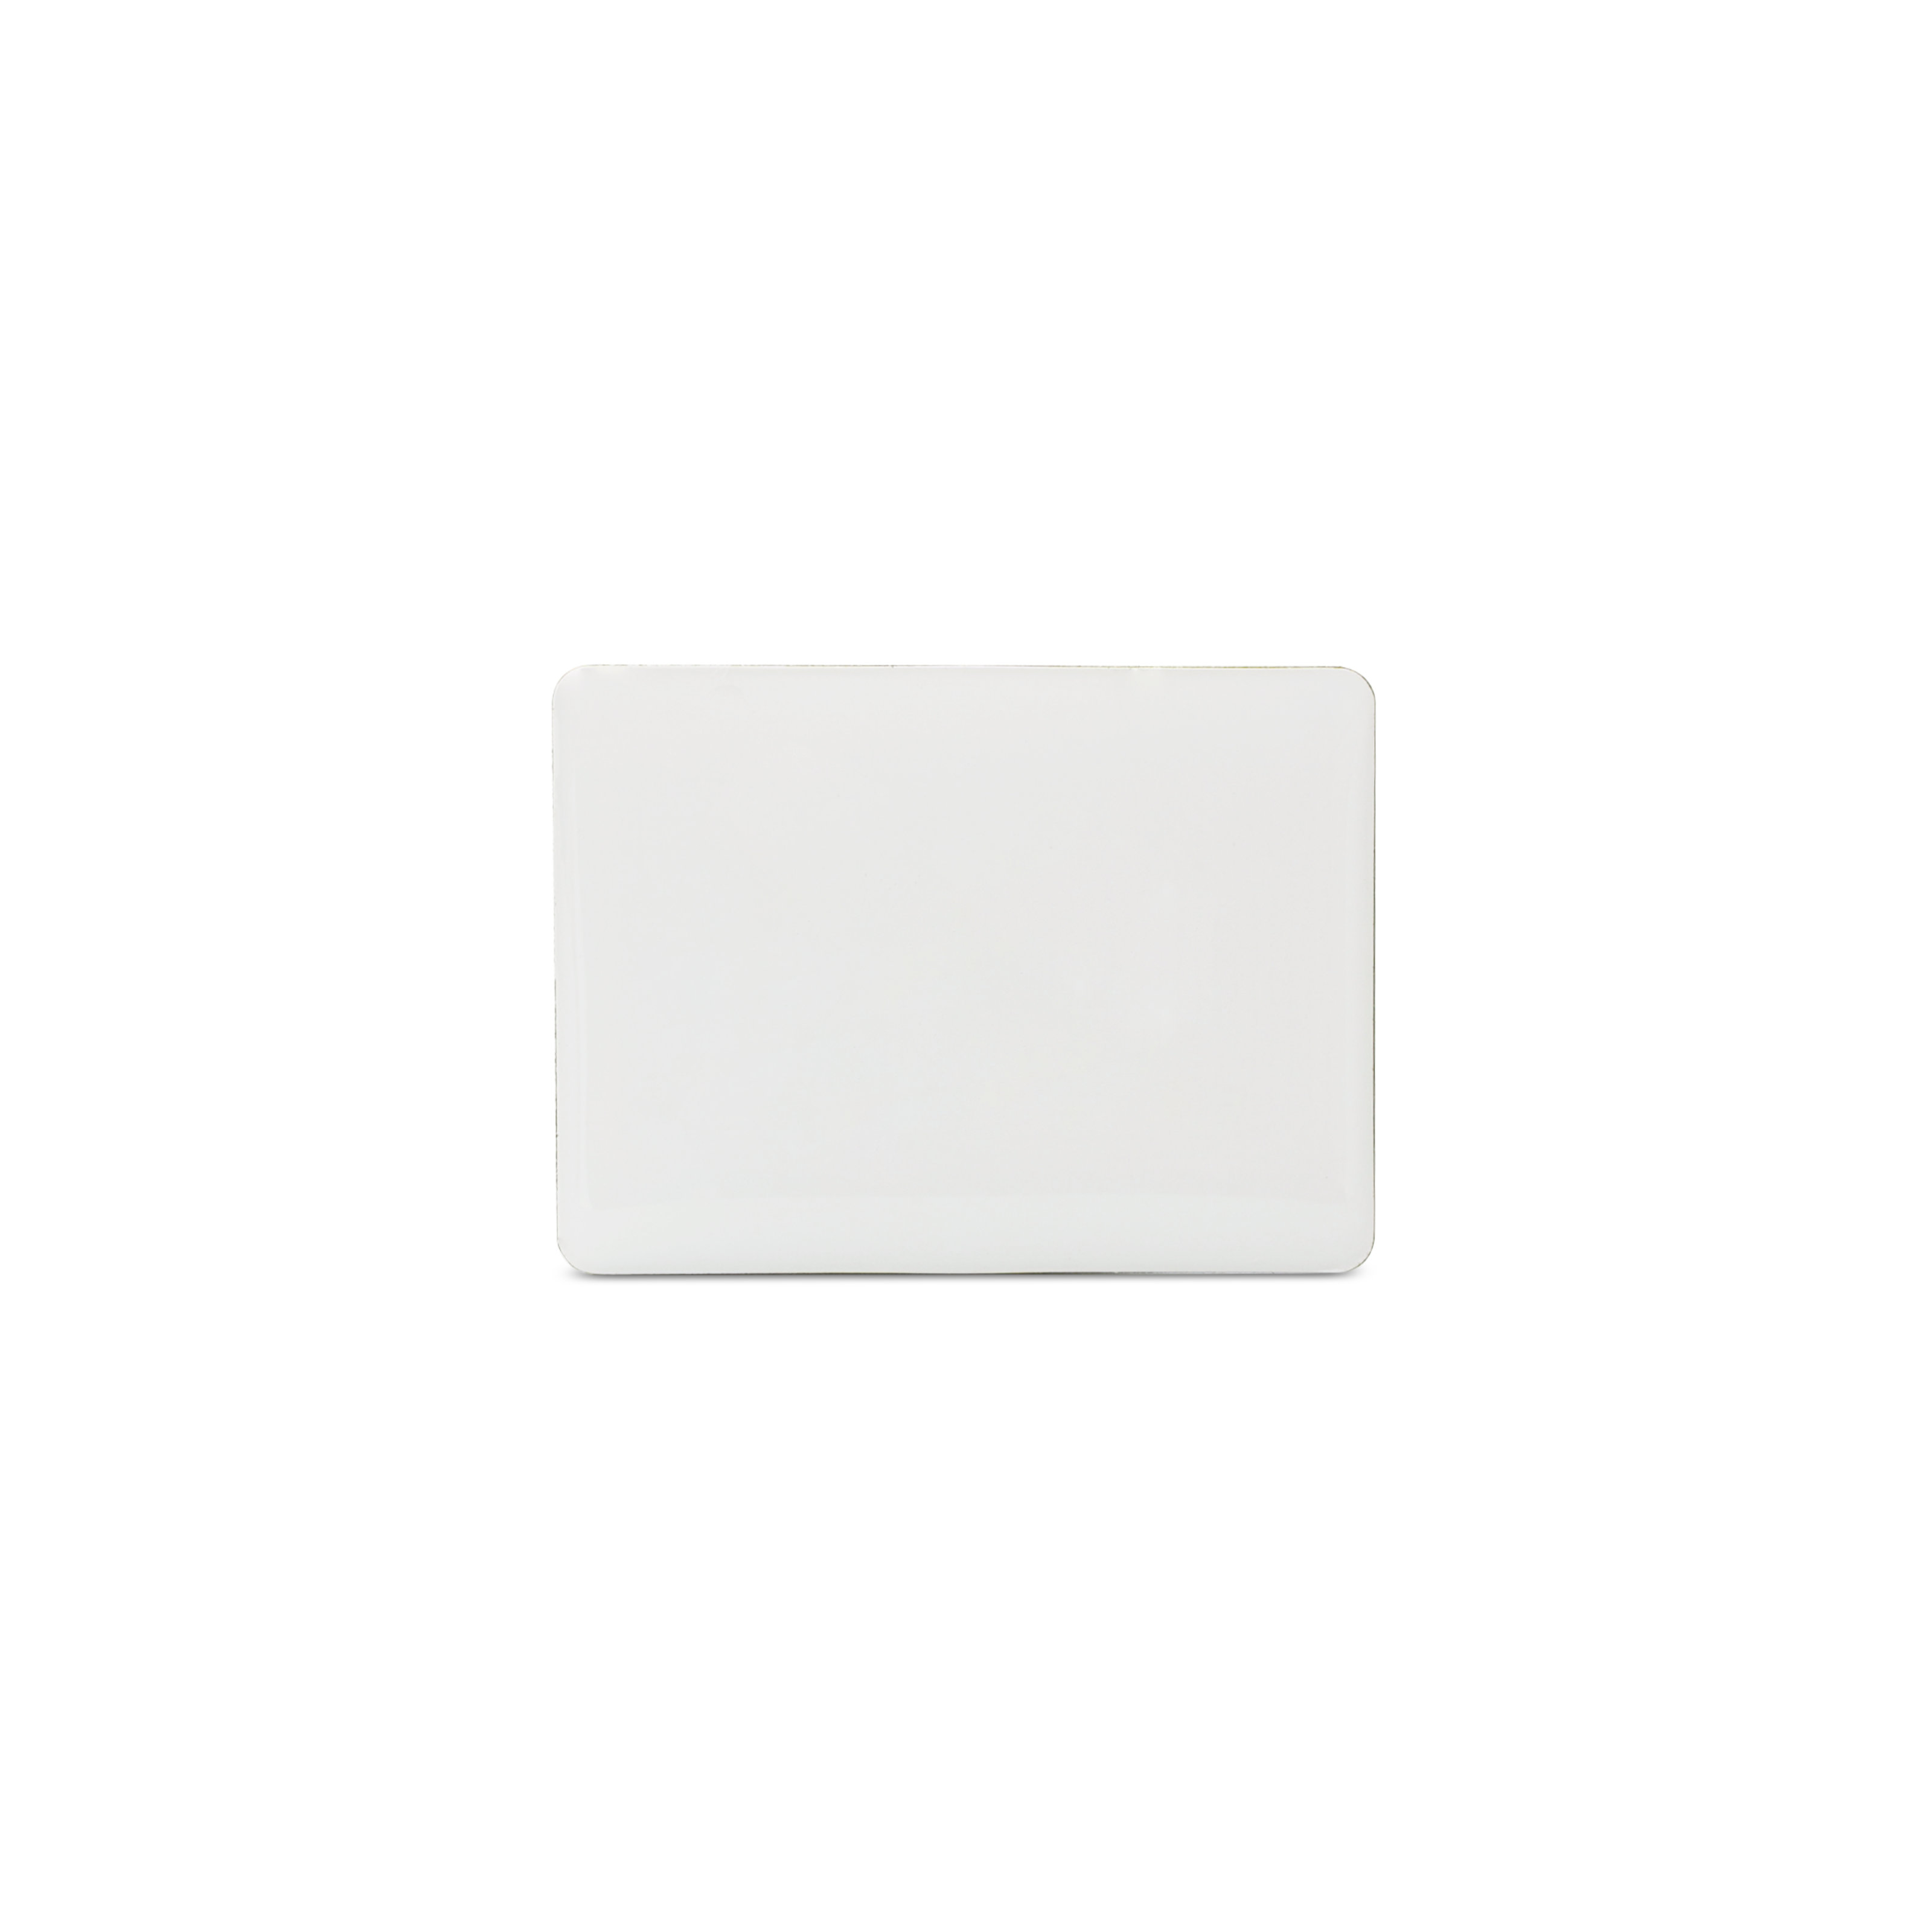 NFC Sticker PET Epoxy - On-Metal - 40 x 30 mm - MIFARE Classic 1k - 1024 Byte - weiß